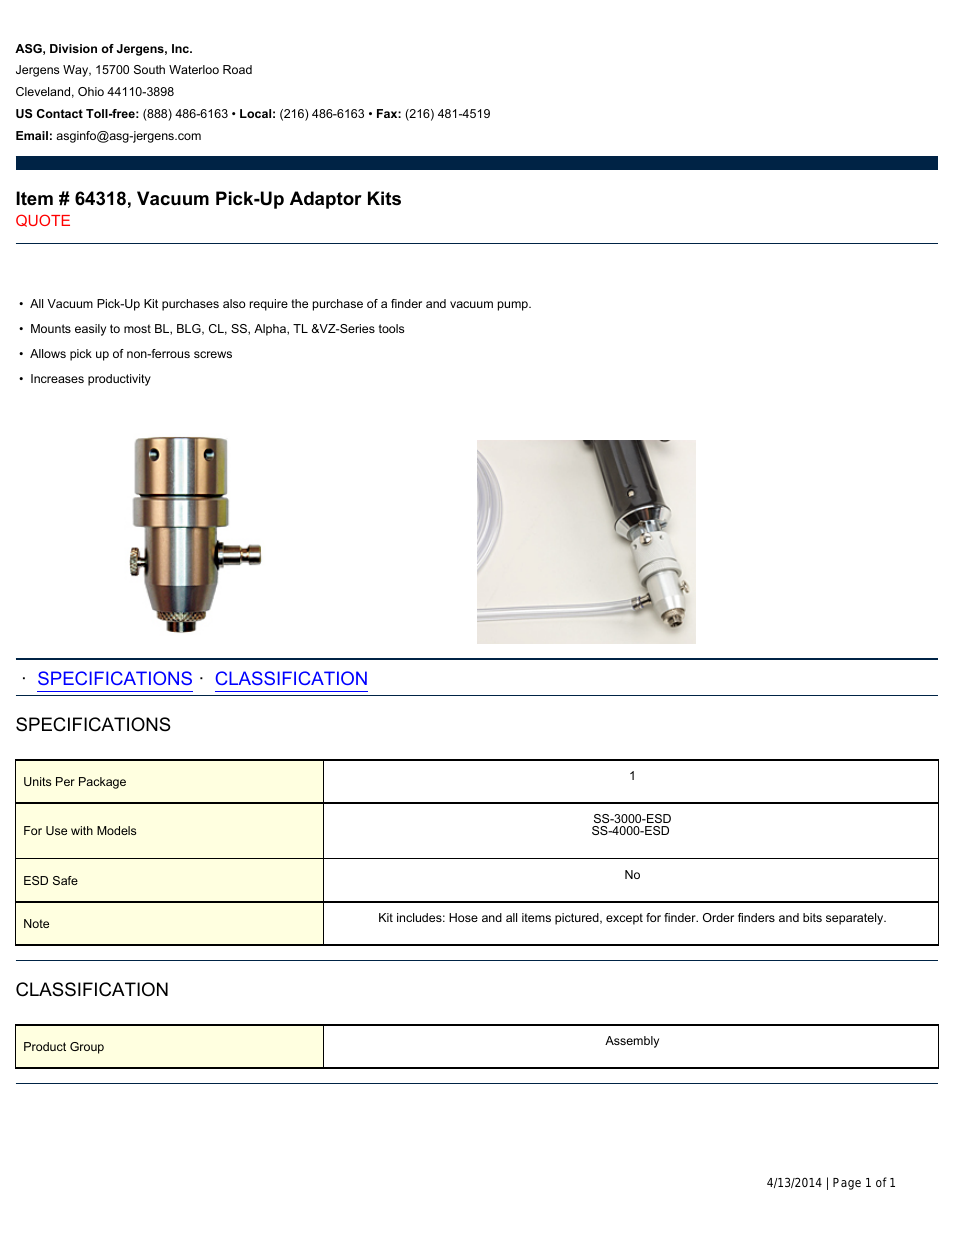 64318 Vacuum Pick-Up Adaptor Kits